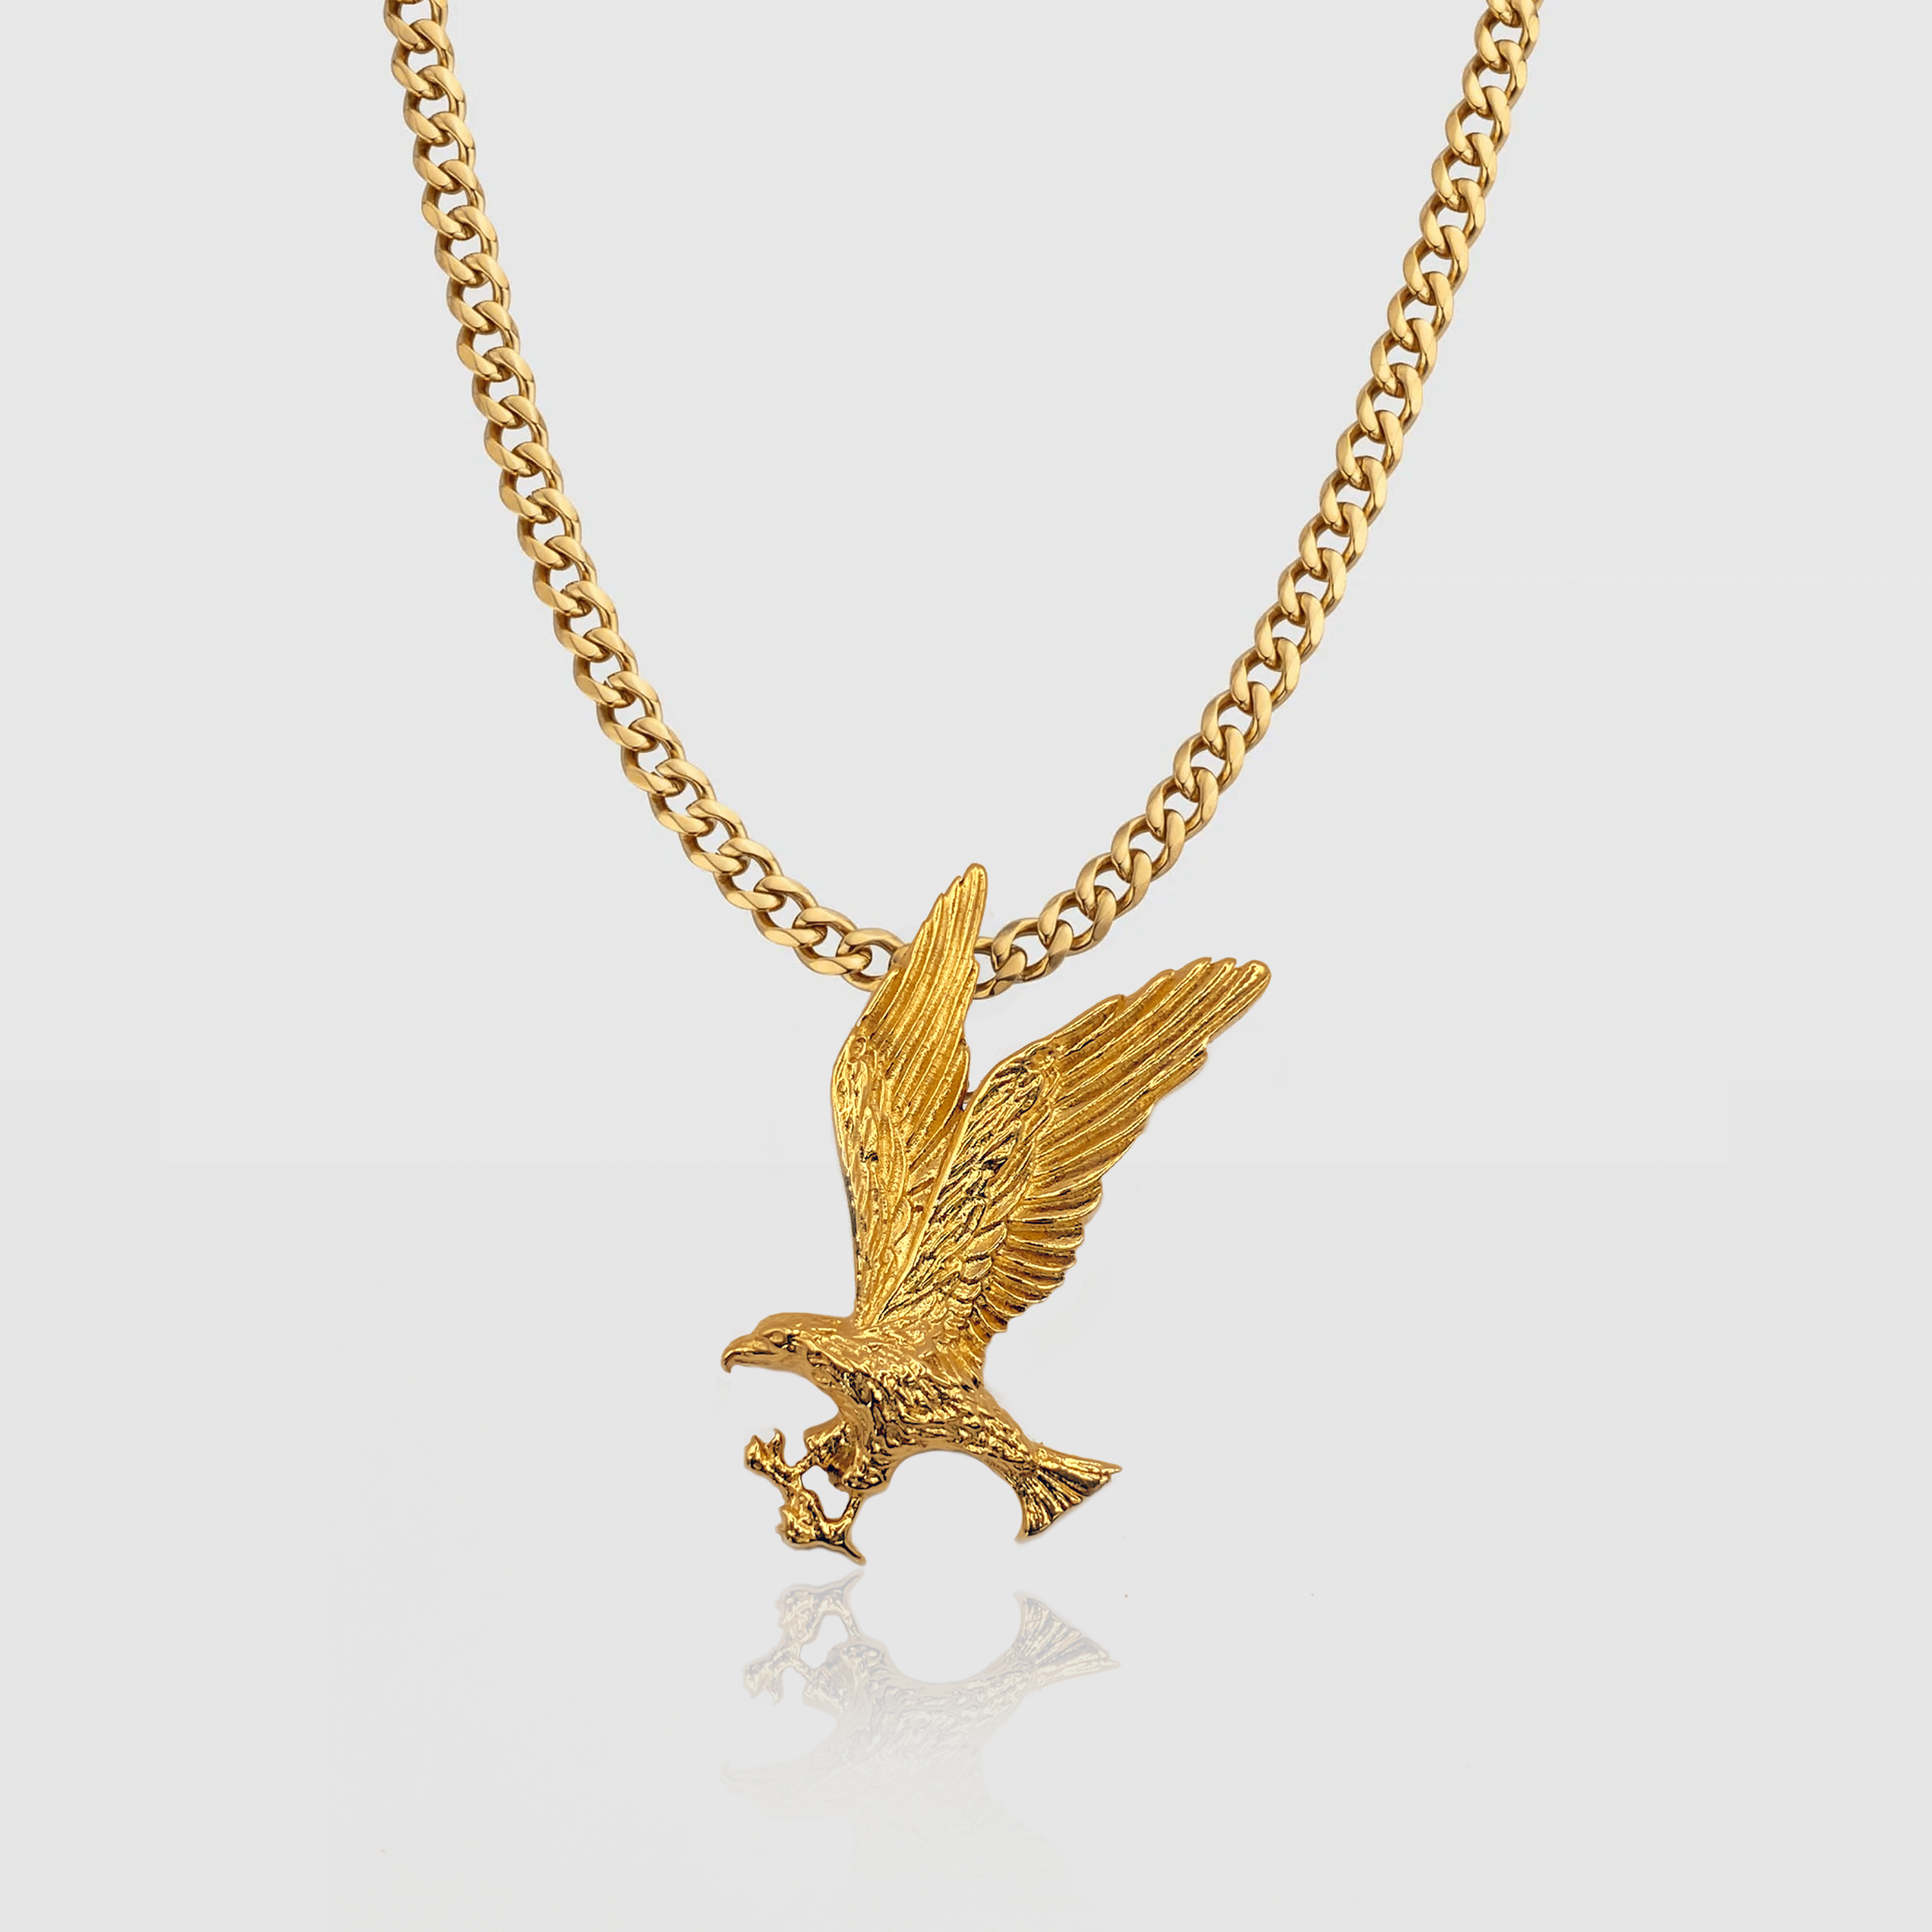  18K Gold Eagle Pendant Necklace